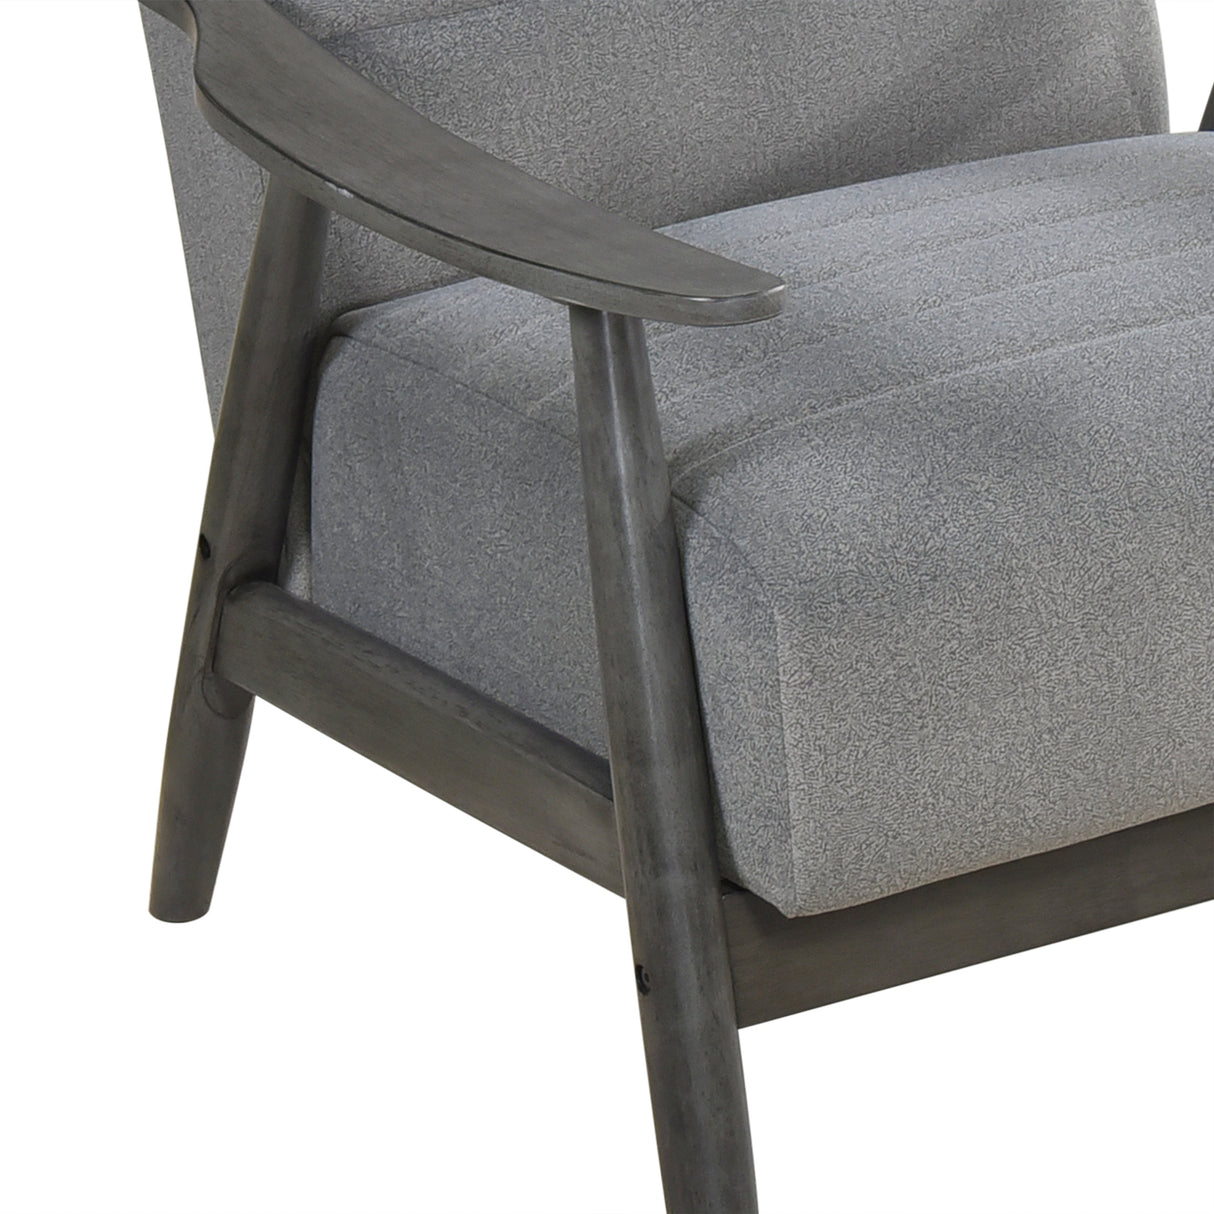 Greeley Gray Velvet Accent Chair